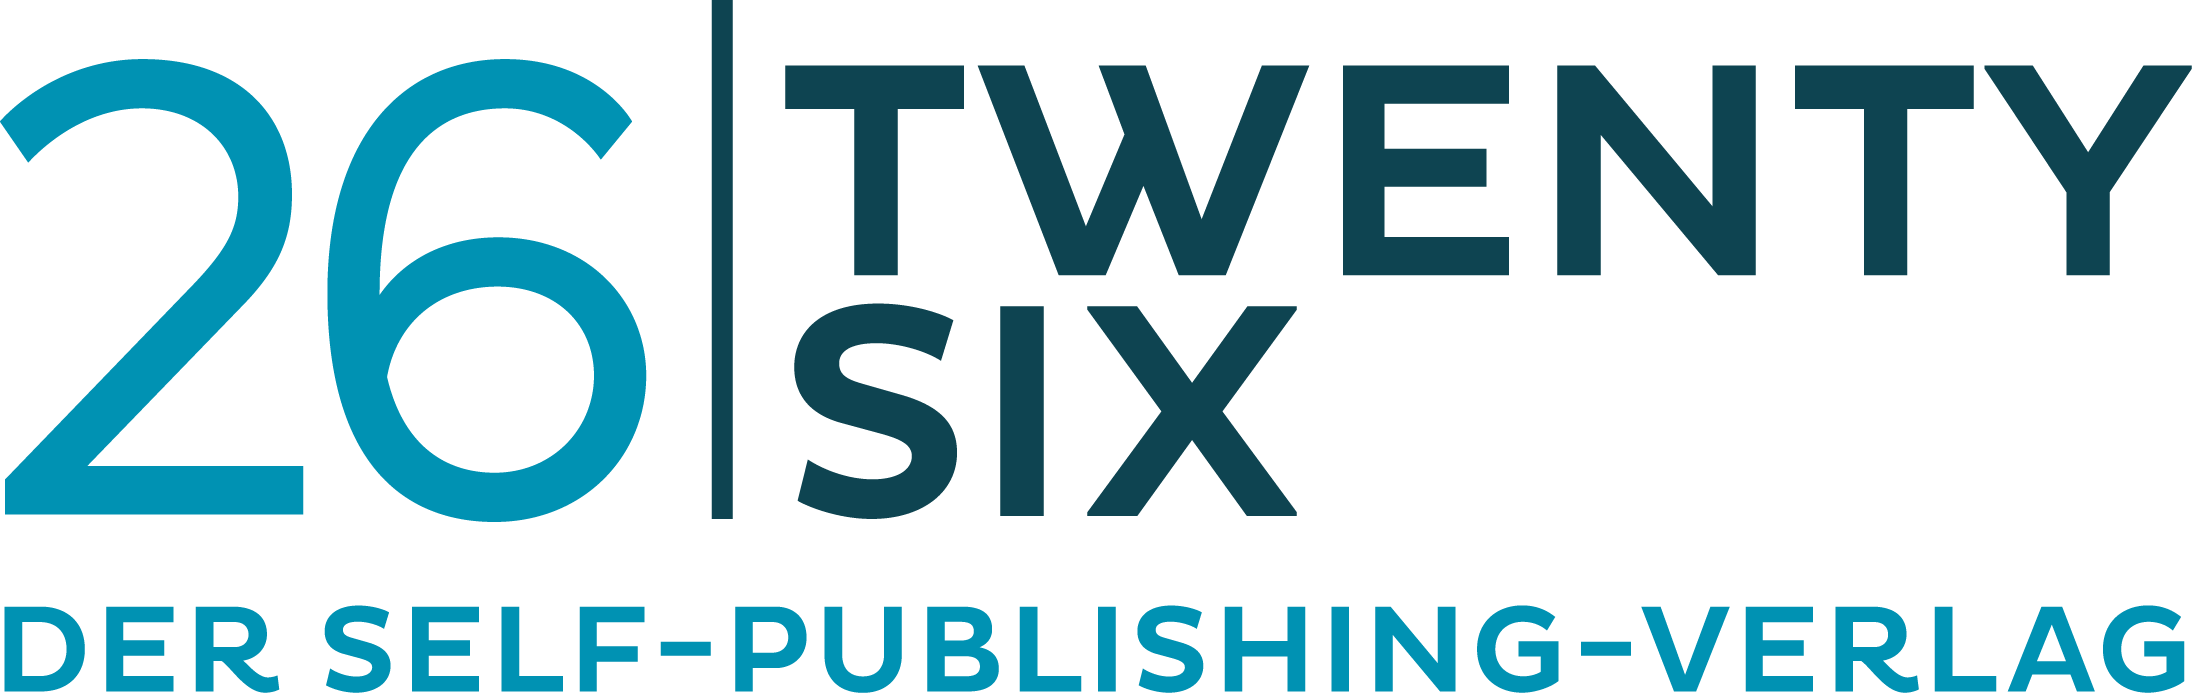 TWENTYSIX - Der Self-Publishing-Verlag